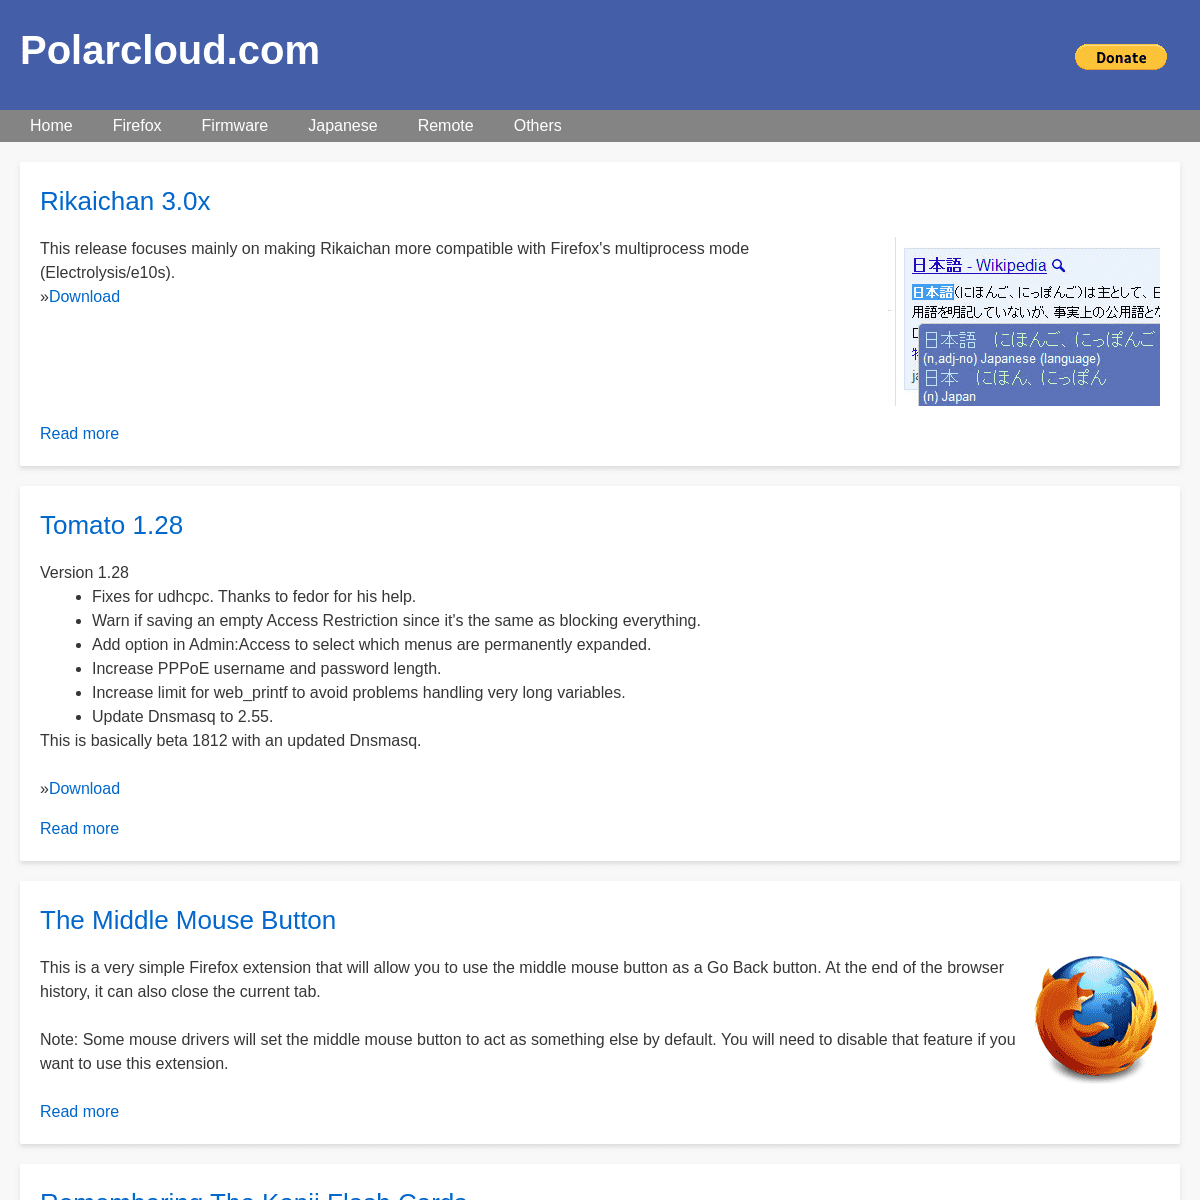 A complete backup of polarcloud.com